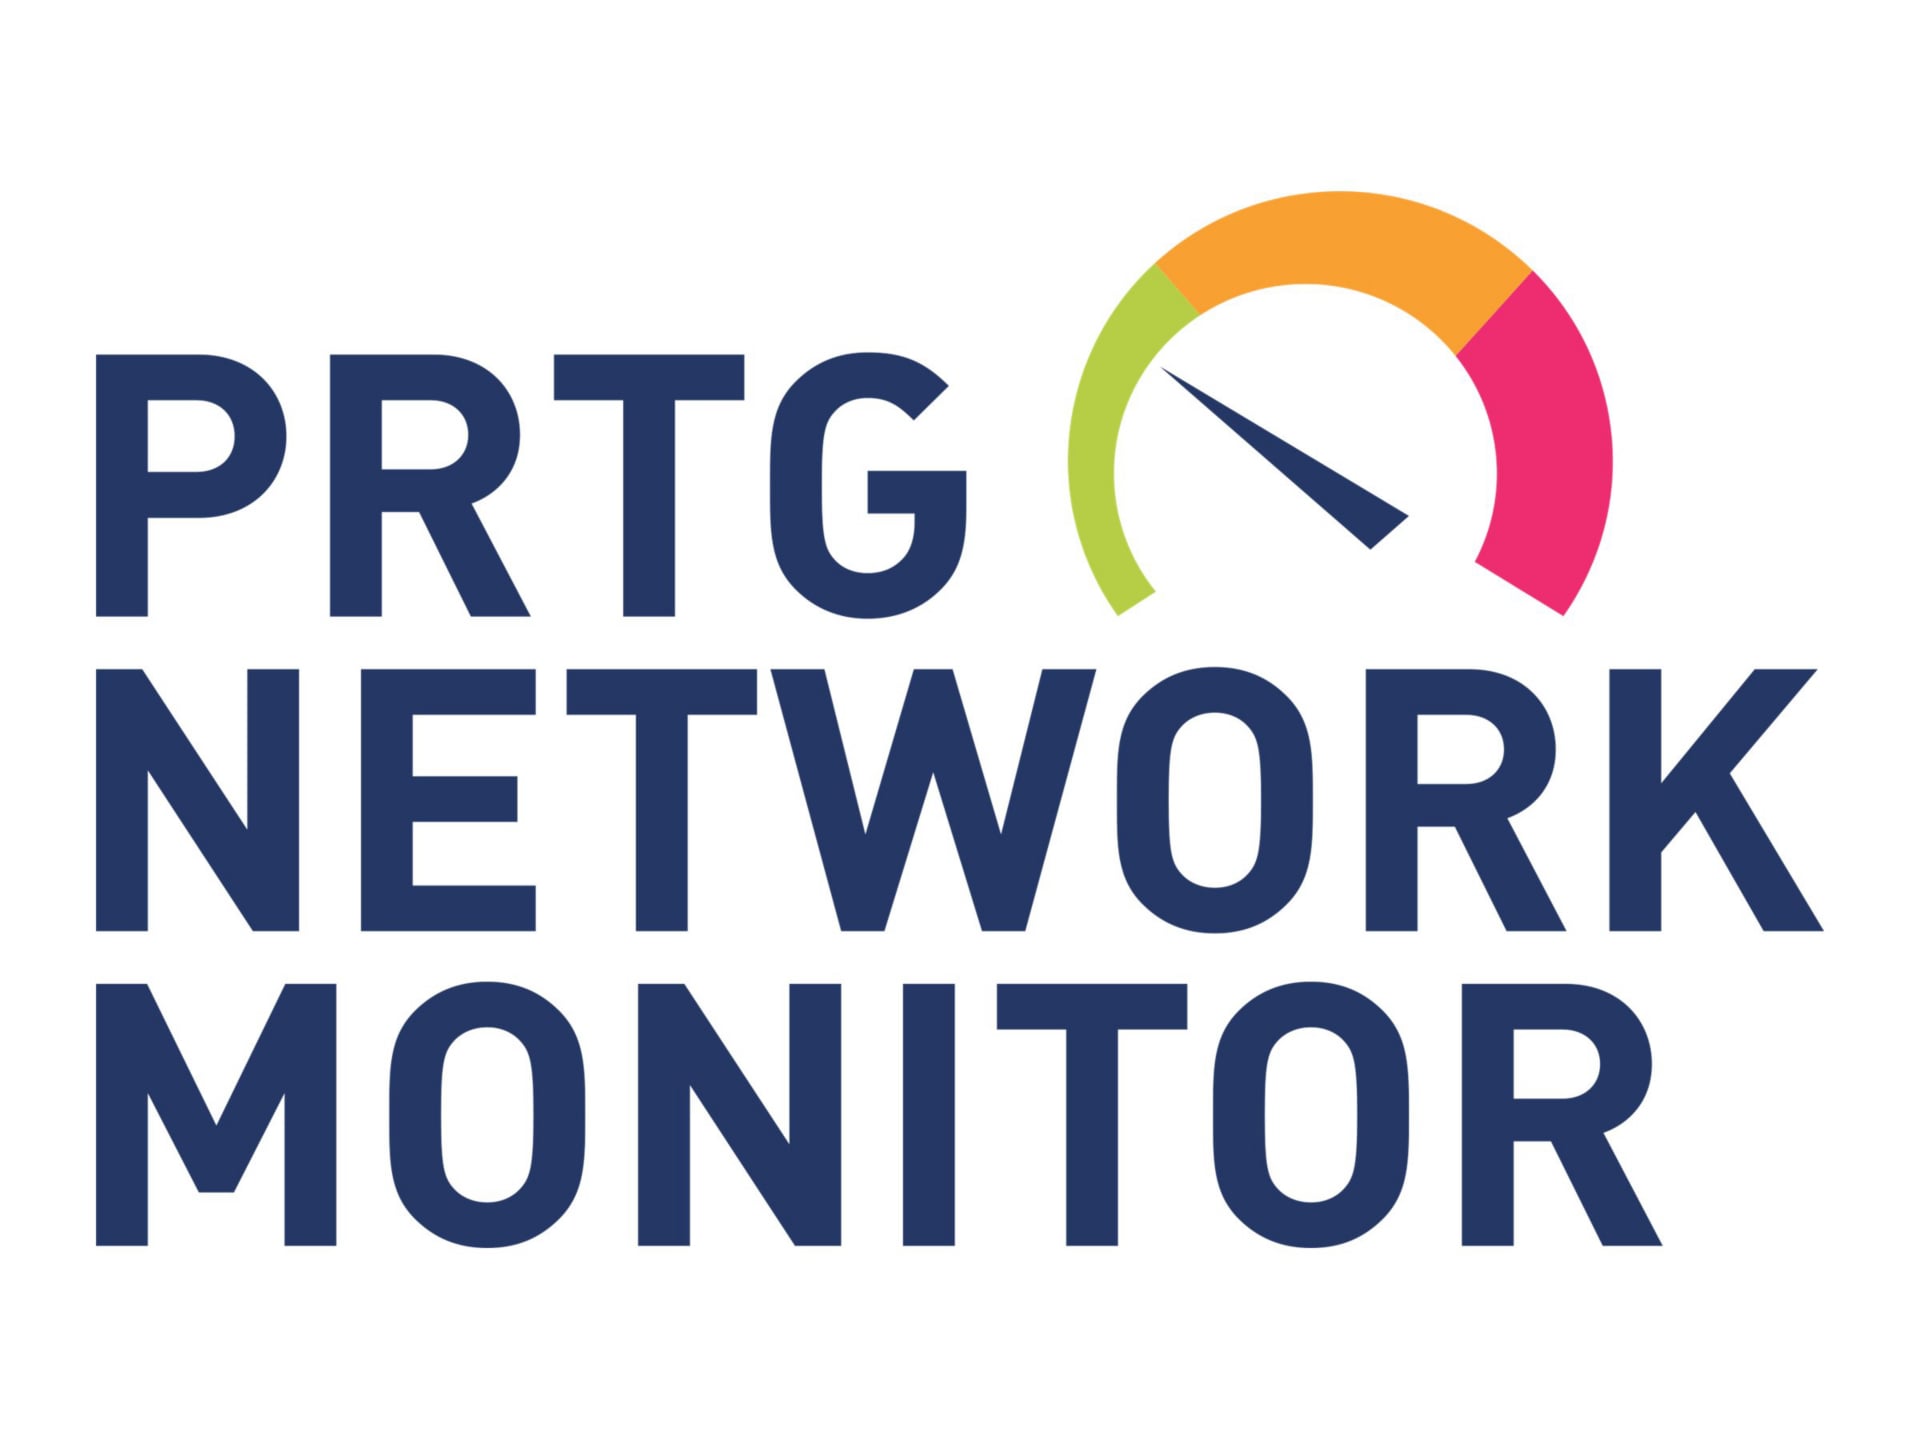 PRTG Network Monitor 2500 - license + 5 Years Maintenance - 2500 sensors, 1